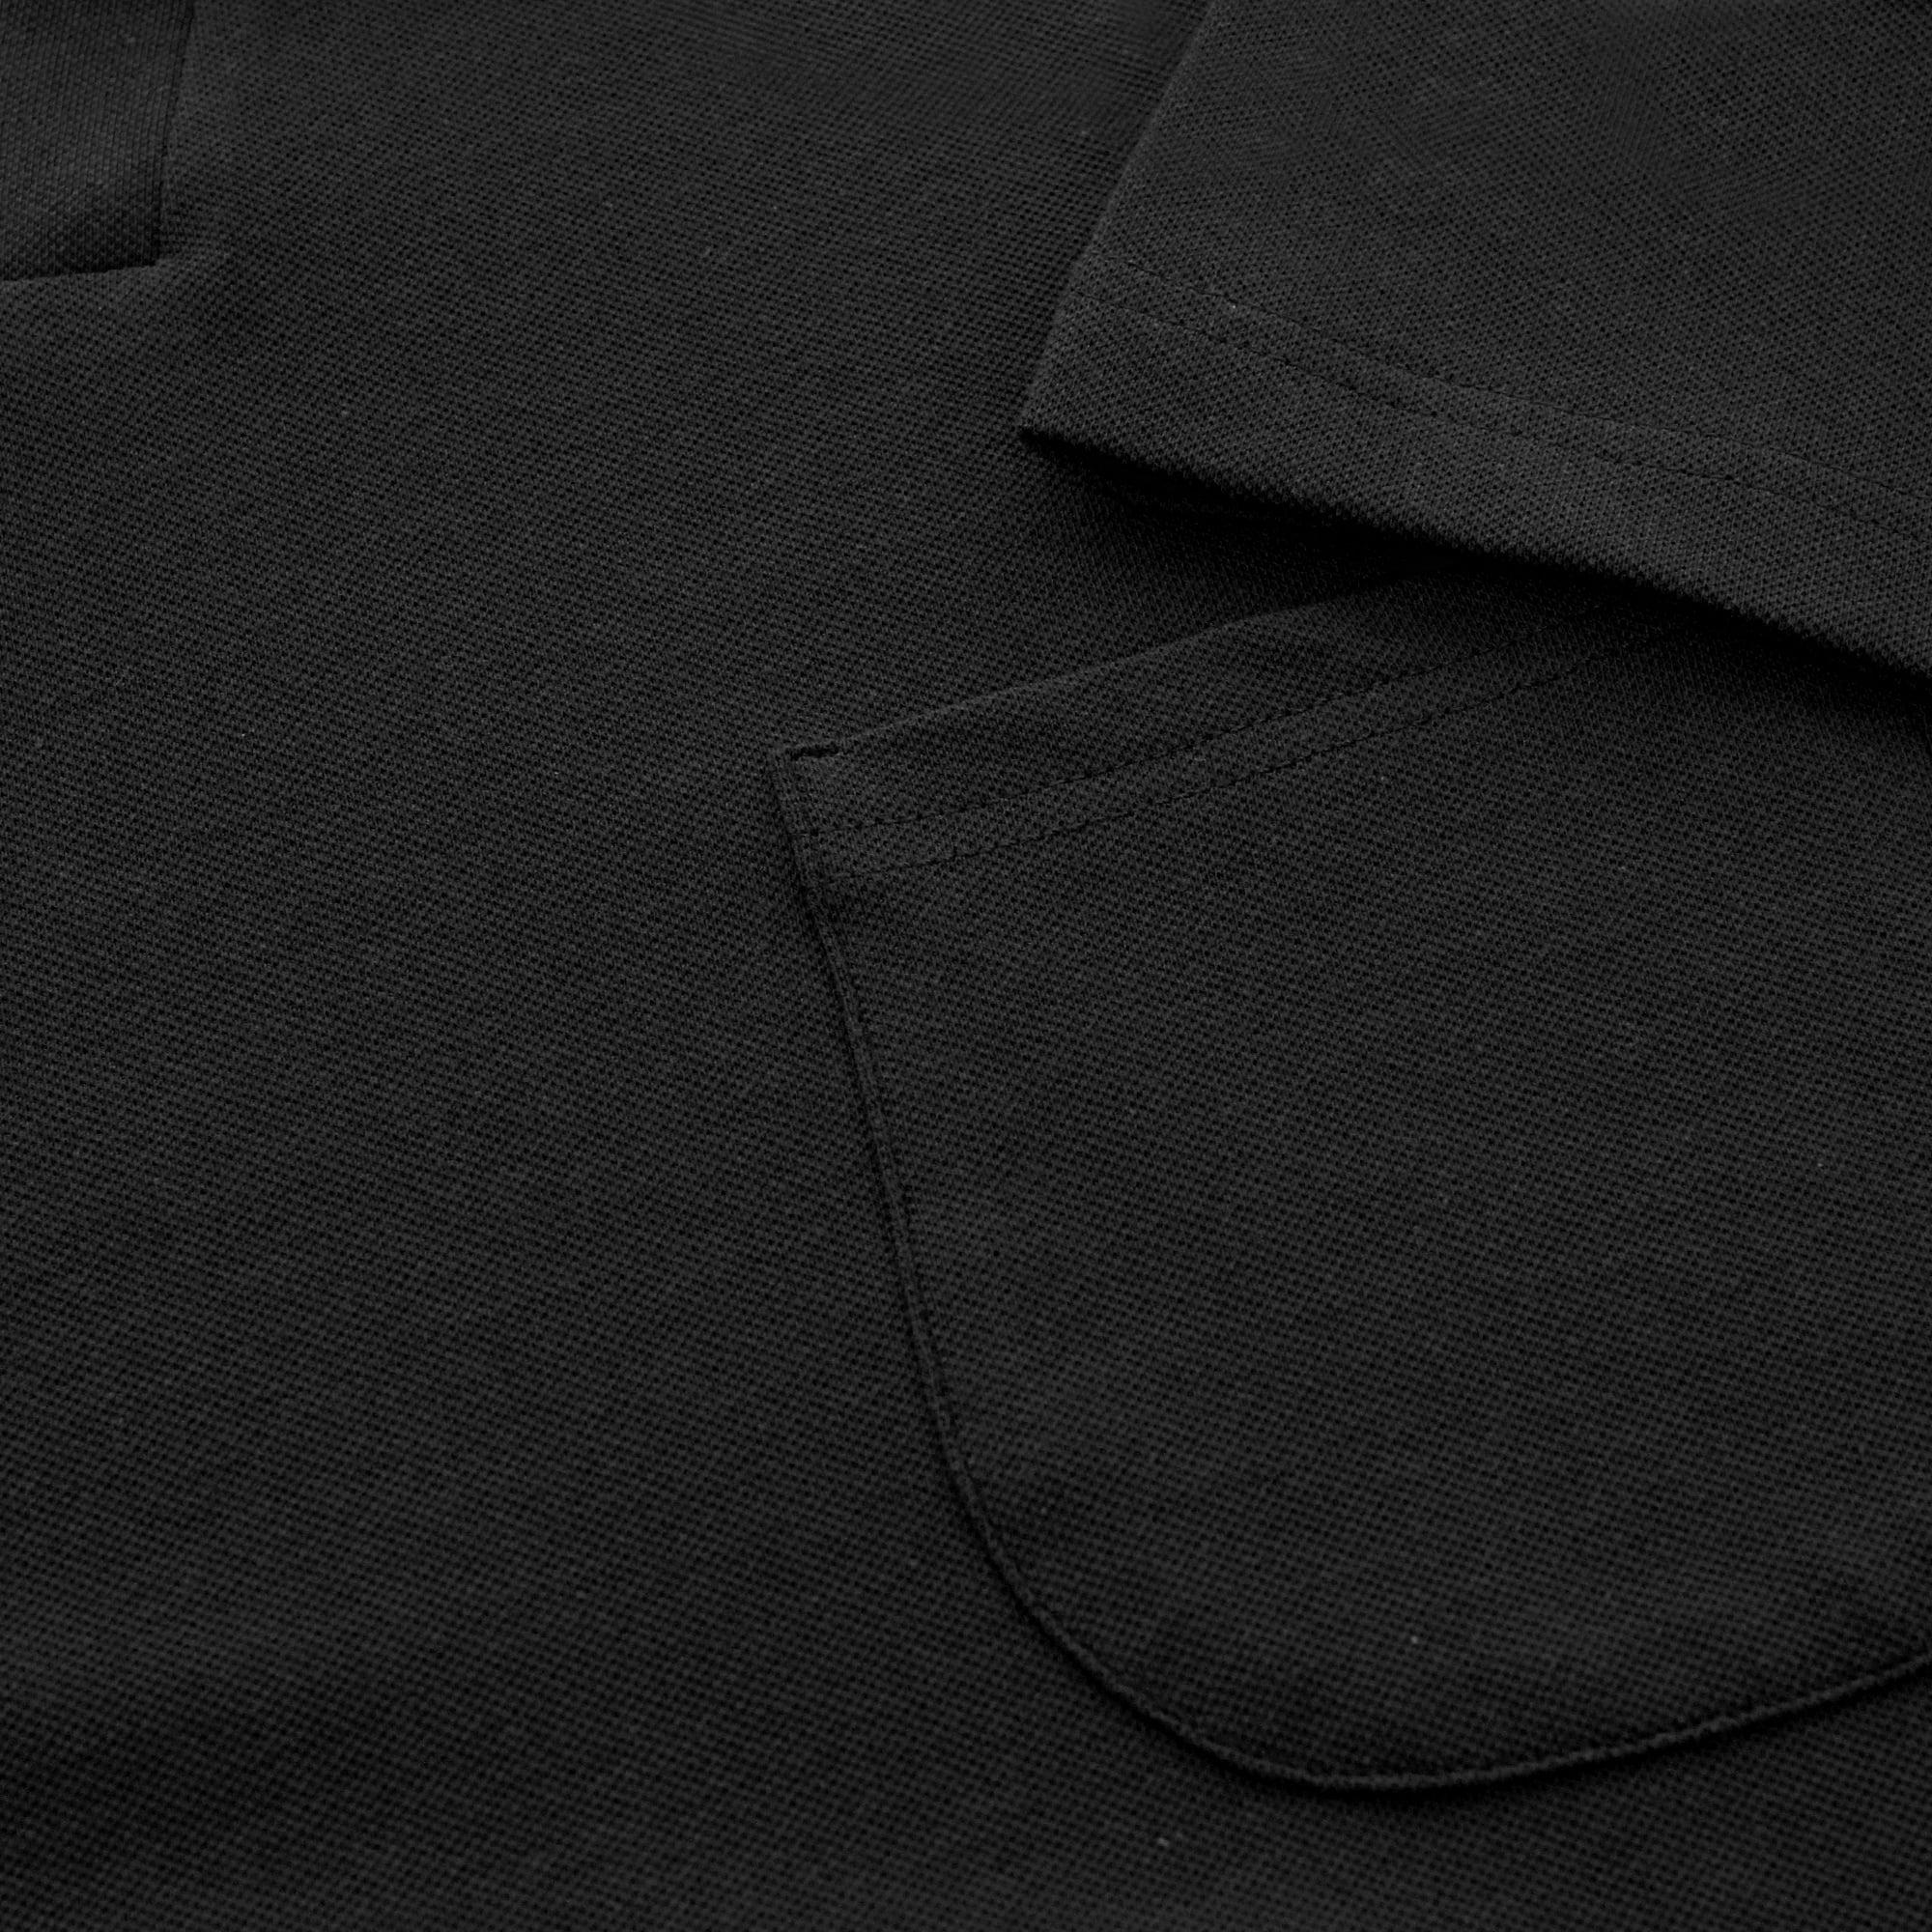 Lyst - Universal Works Pique Black Polo Shirt in Black for Men